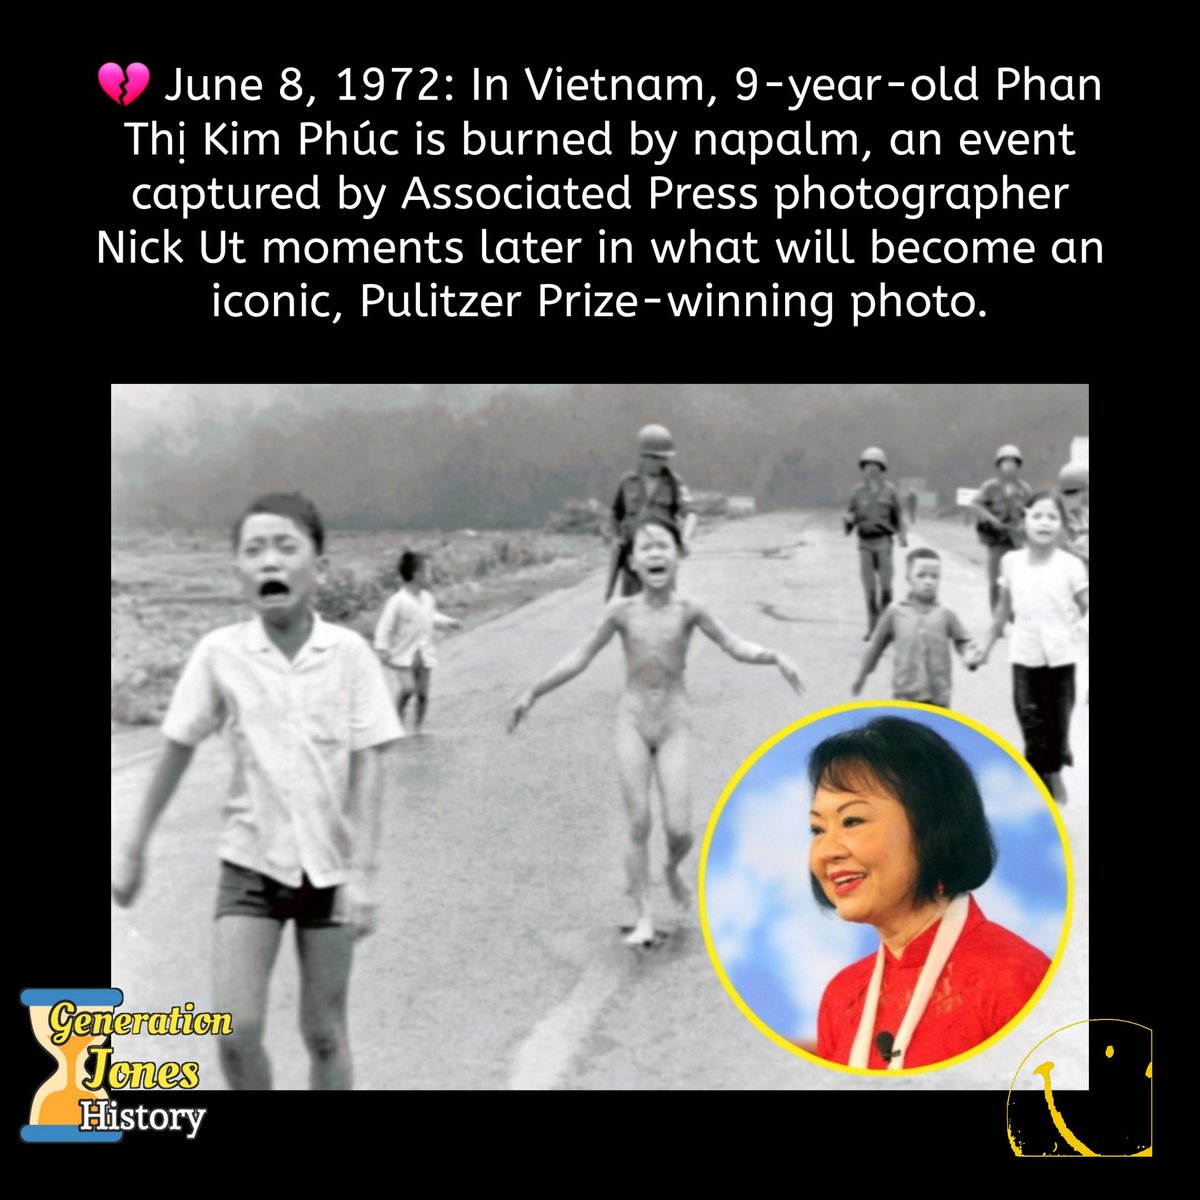 #1970s #vietnam #vietnamwar #photograph #napalmgirl #phanthikimphuc #nickut #pulitzerprize #journalism #history #onthisday #thisdayinhistory #generationx #todayinhistory #babyboomers #generationjones